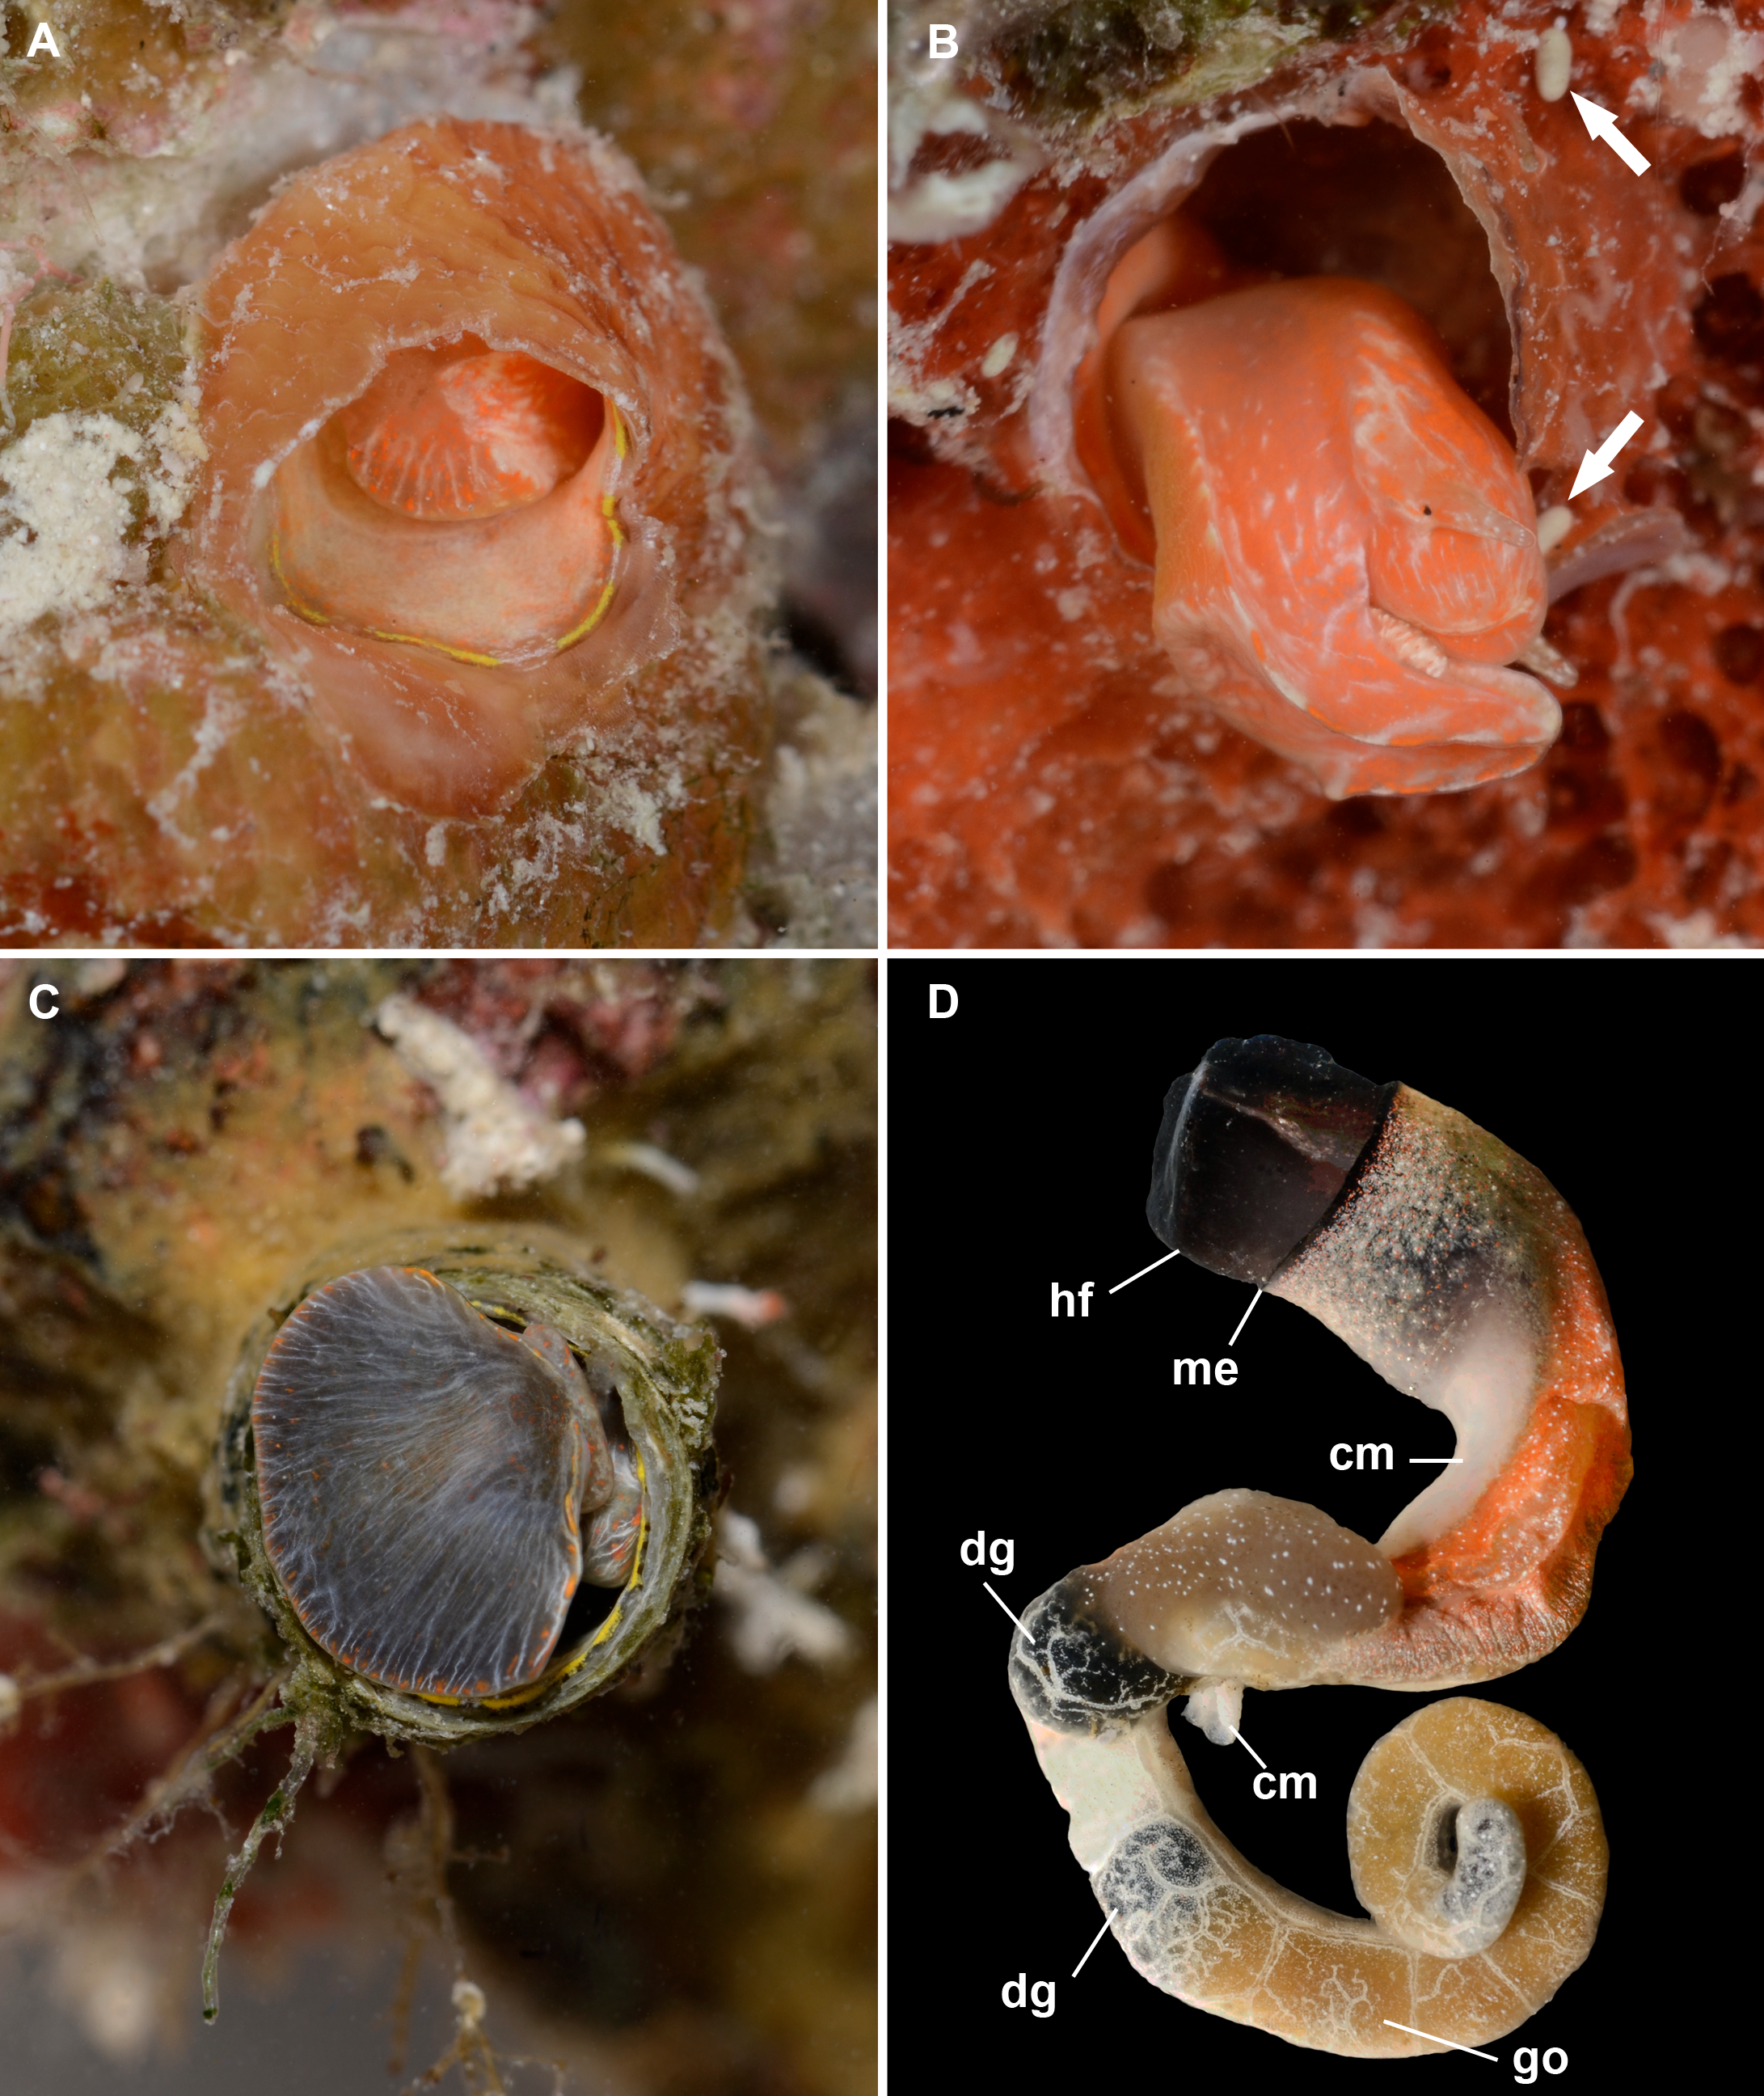 Rogue Mitochondria Turn Hermaphroditic Snails Female: Study